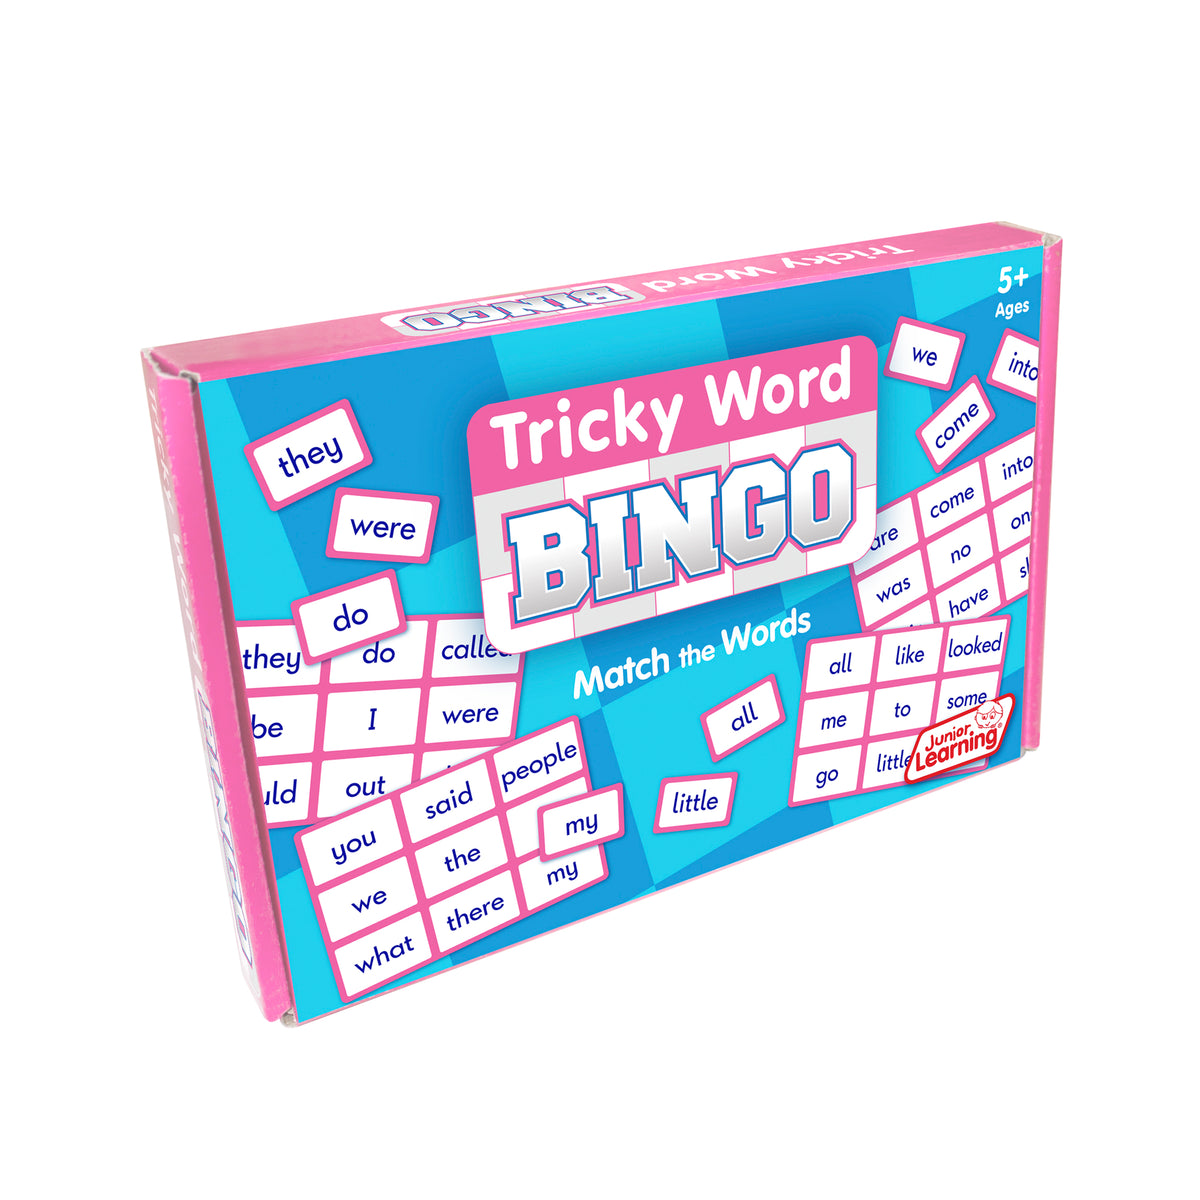 Junior Learning JL648 Tricky Word Bingo box angeld right